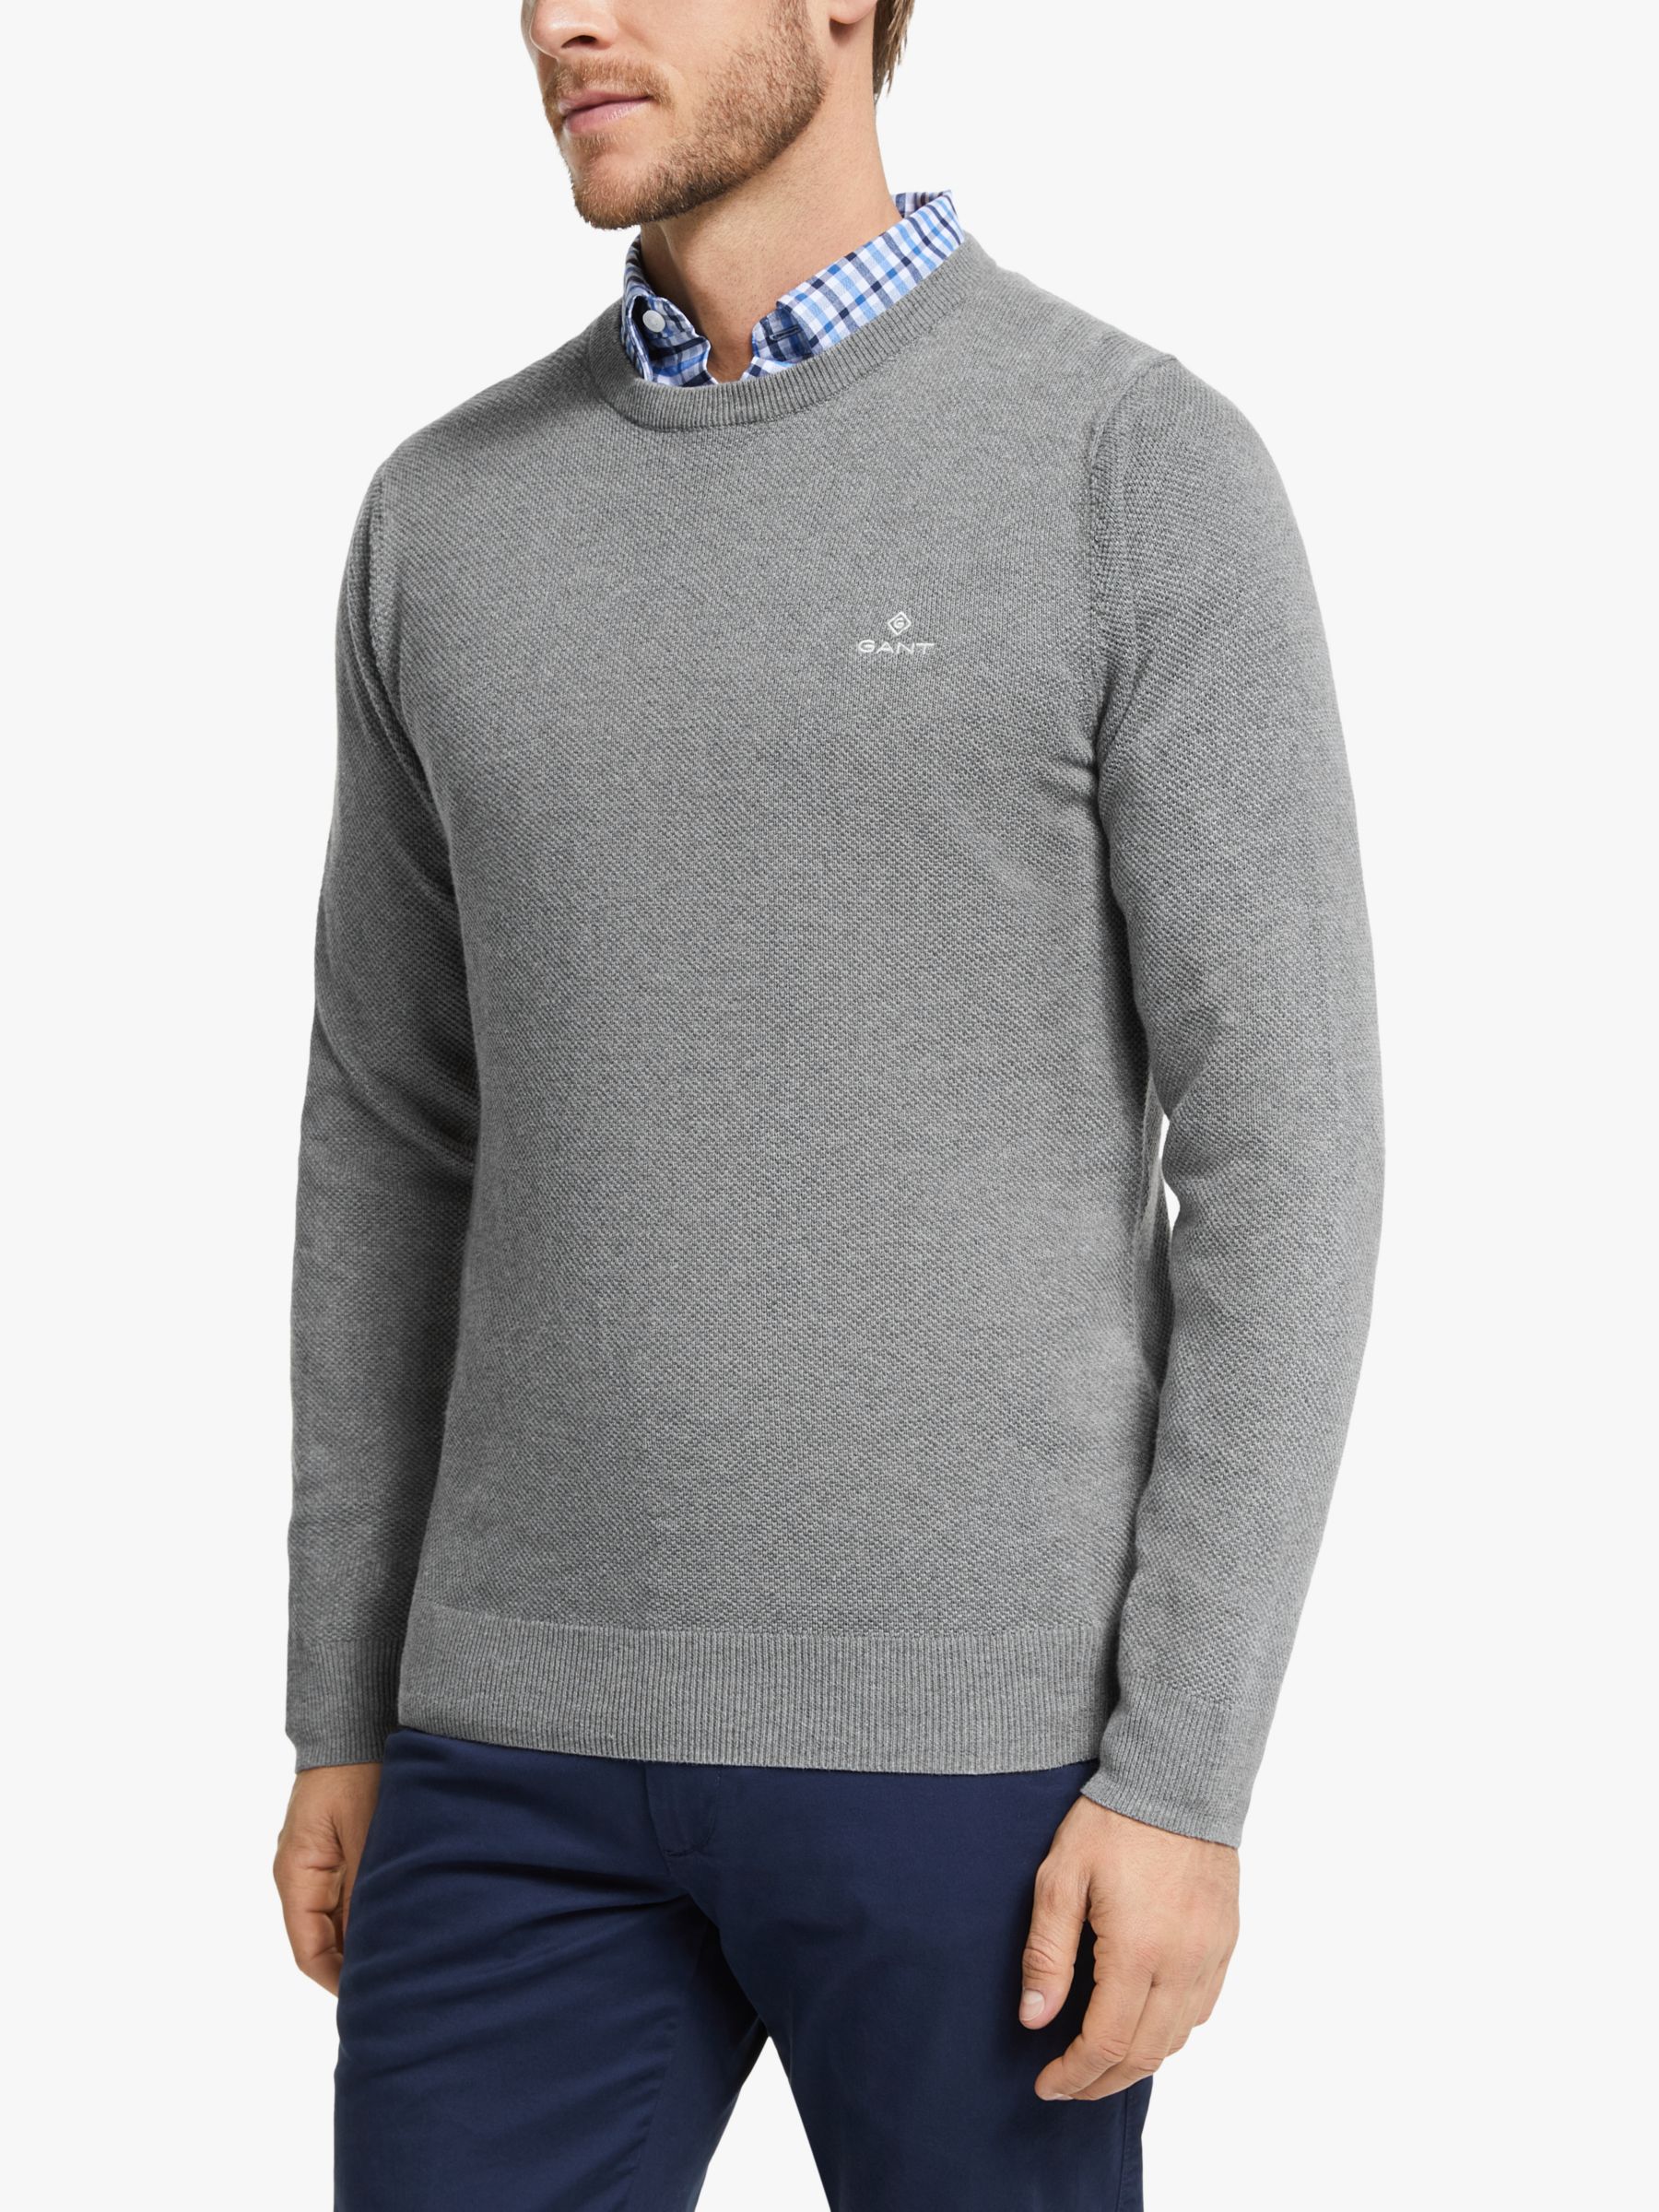 GANT Cotton Piqué Crew Neck Sweater, Grey at John Lewis & Partners